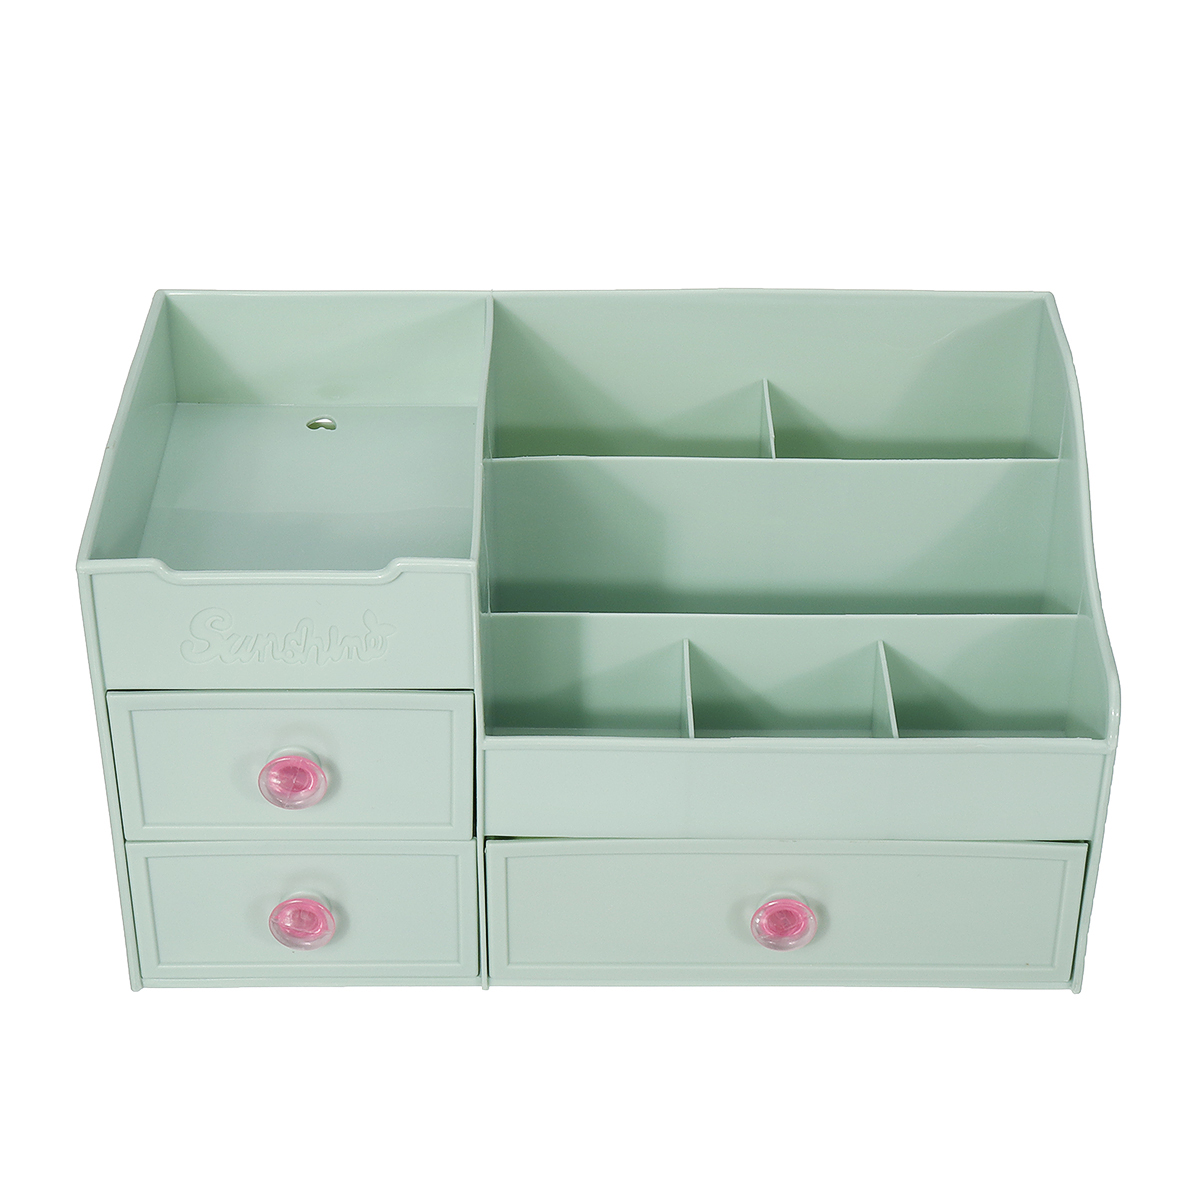 Plastic-Desktop-Organizer-Makeup-Organizer-Cosmetic-Storage-Box-Stationery-Holder-Home-Decorations-1485168-2